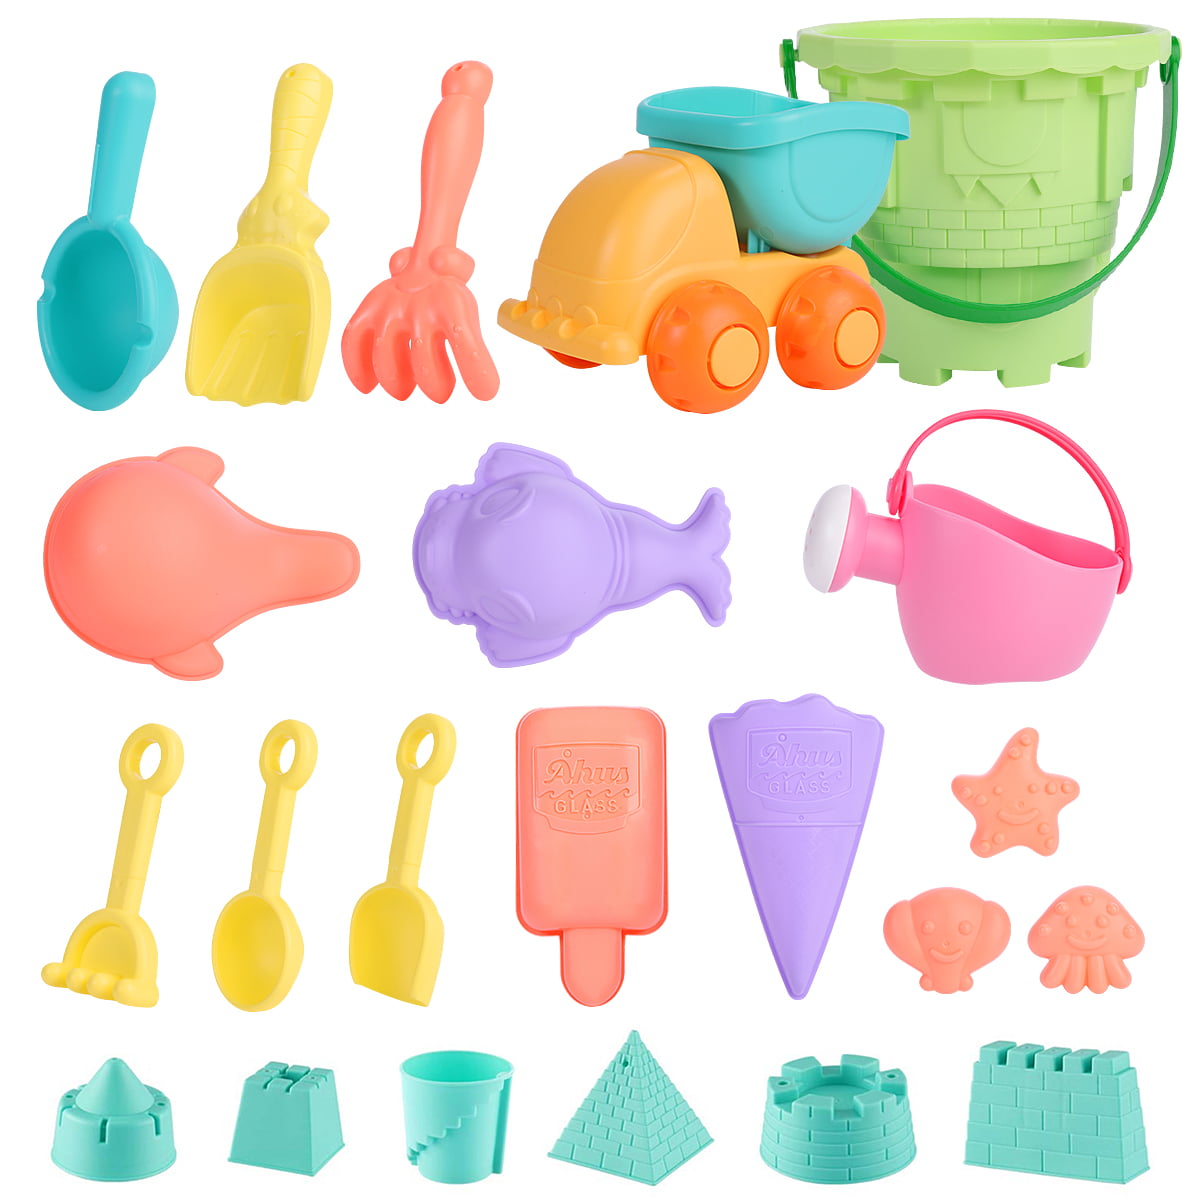 Random Color Summer Beach Toys 7 Sets Water Toy Sand Toy Beach Shovel Beach Bucket Set Children Play Set